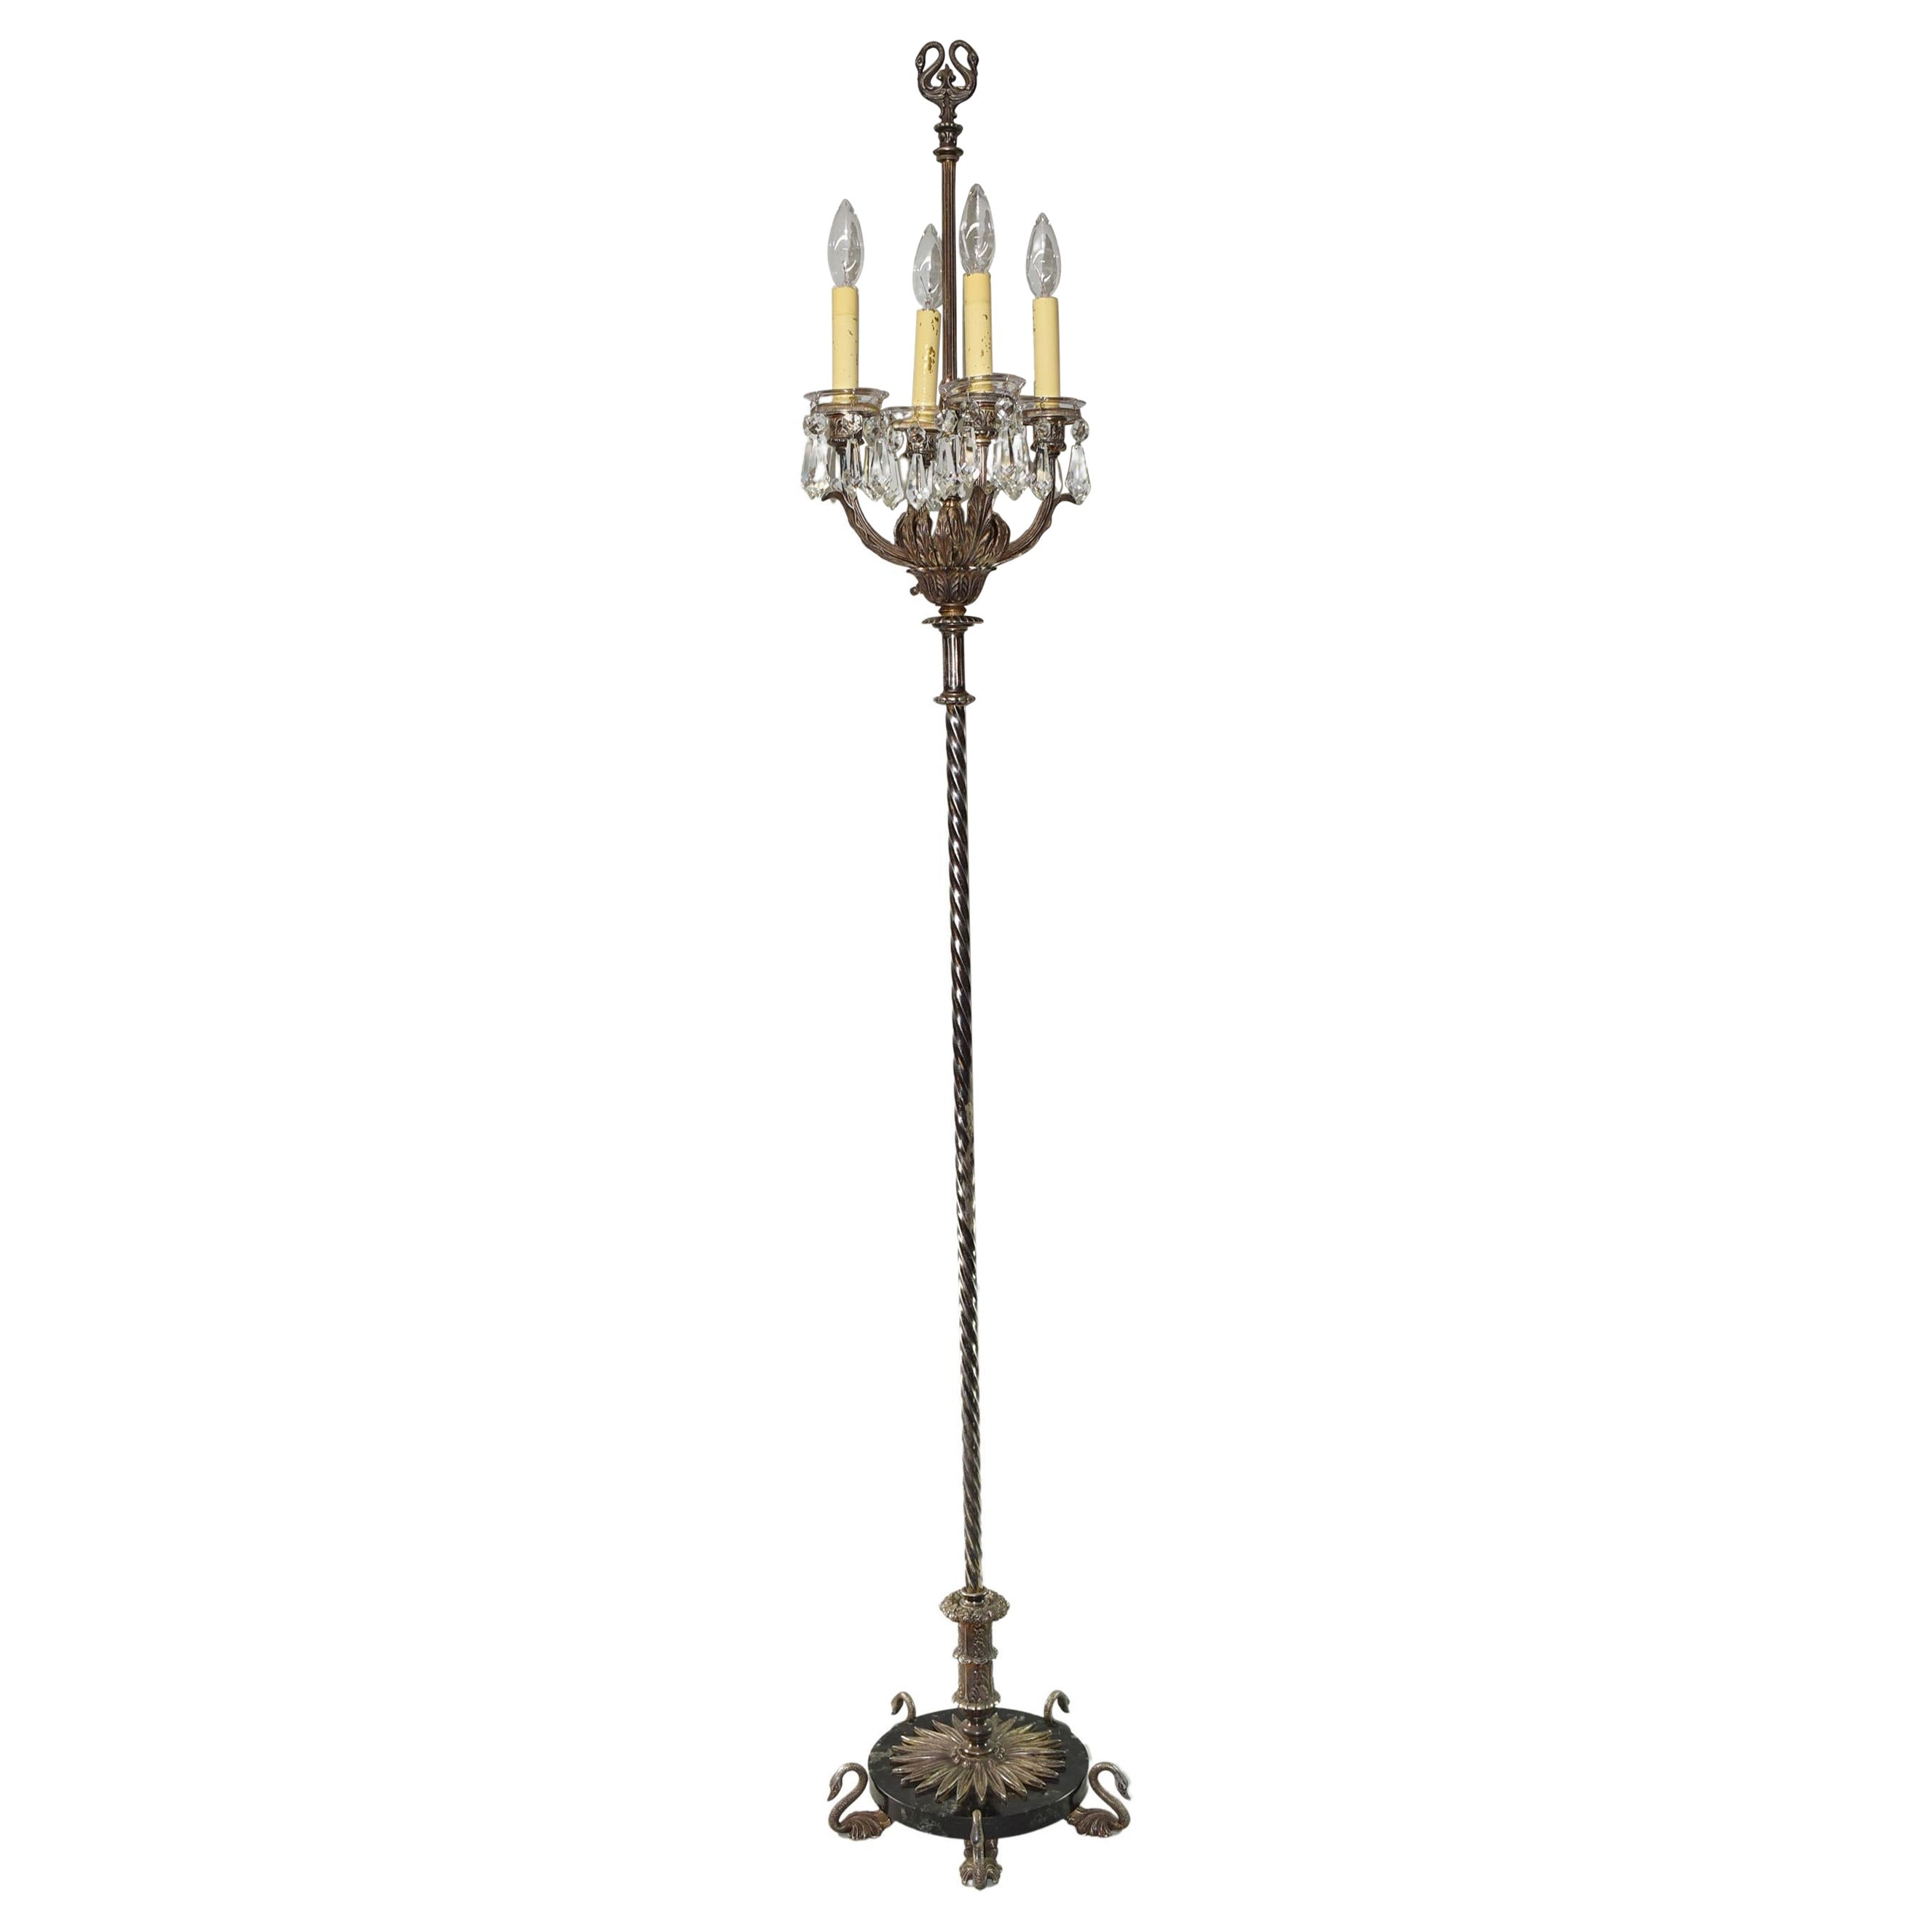 Vintage Twisted Iron Stem Figural Swans Floor Lamp Crystal Drops For Sale